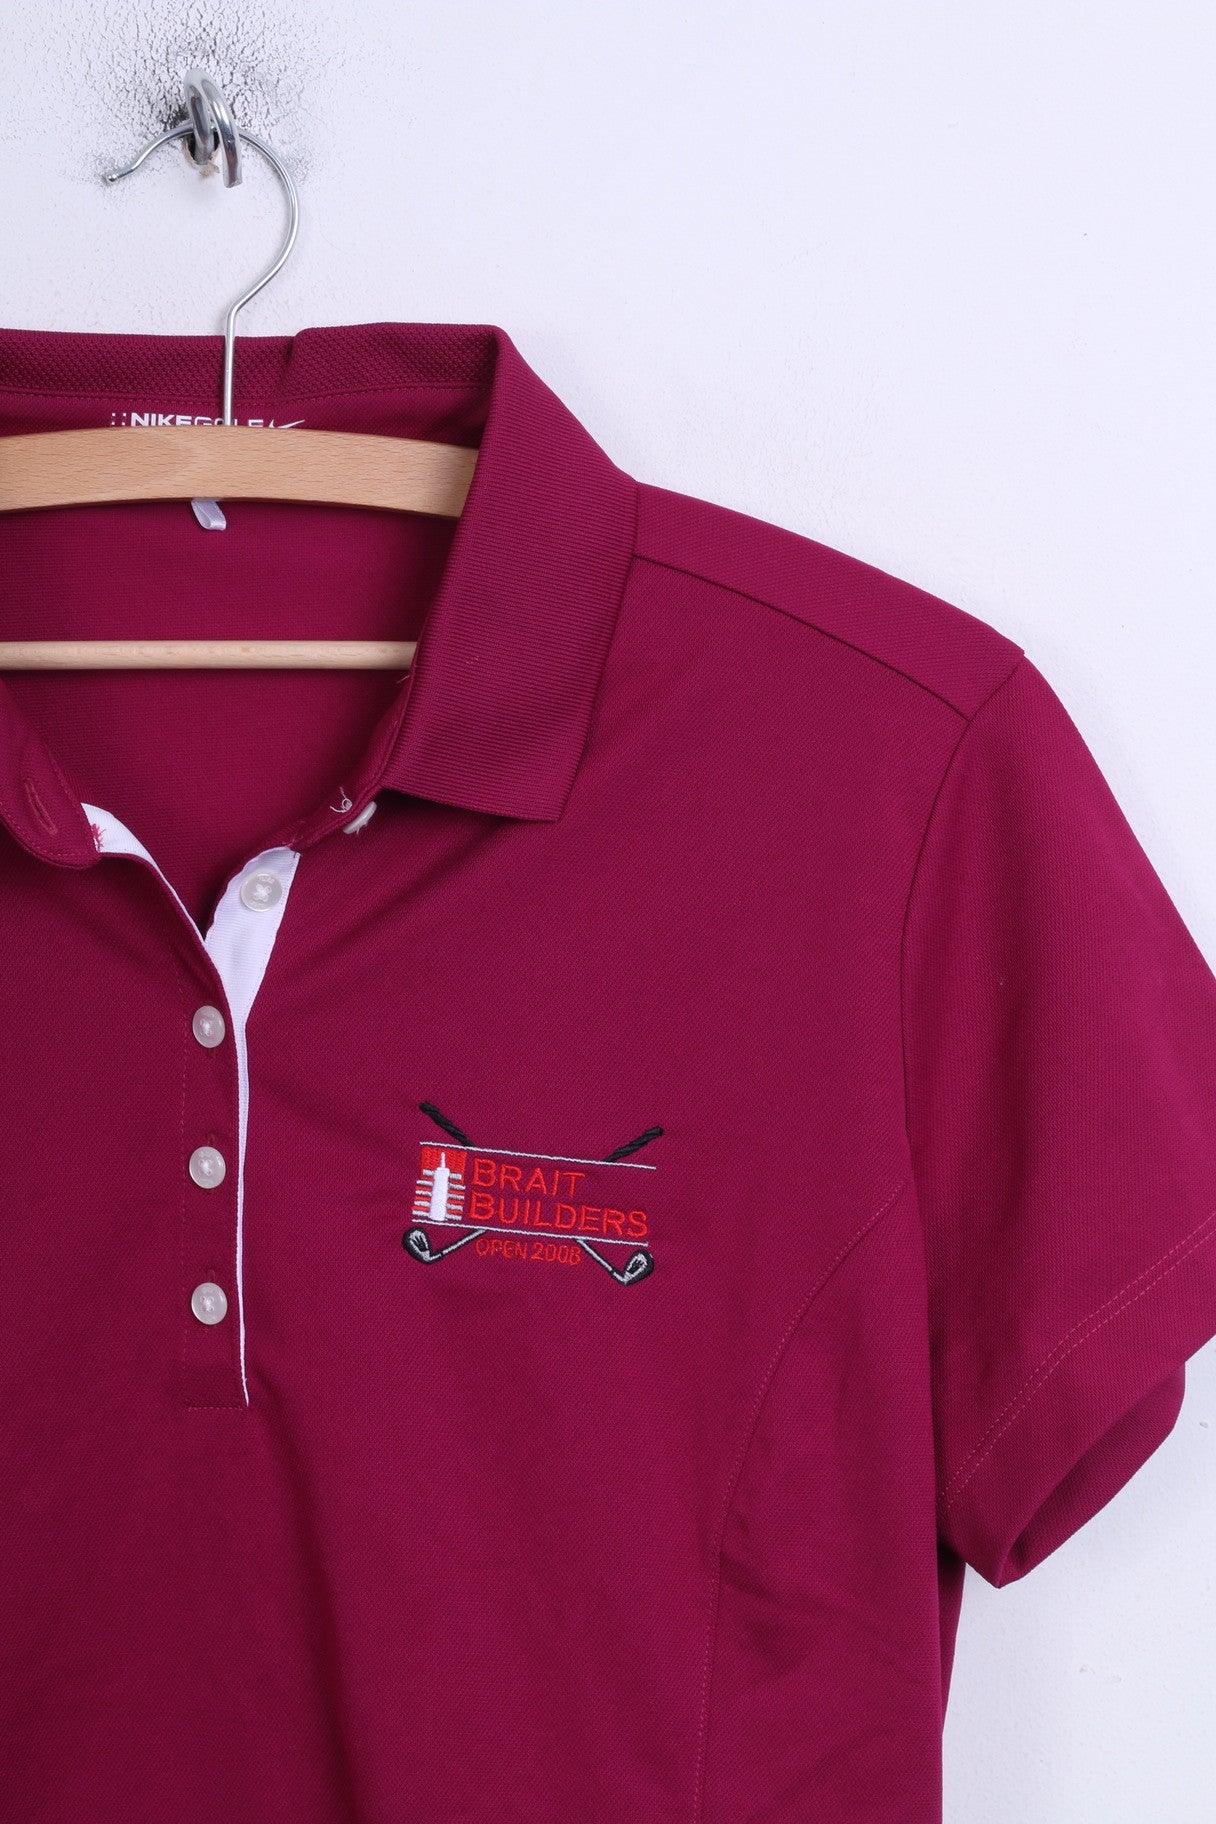 Nike Golf Brait Builders Boys L (12-14) Polo Shirt Amaranth Sport - RetrospectClothes